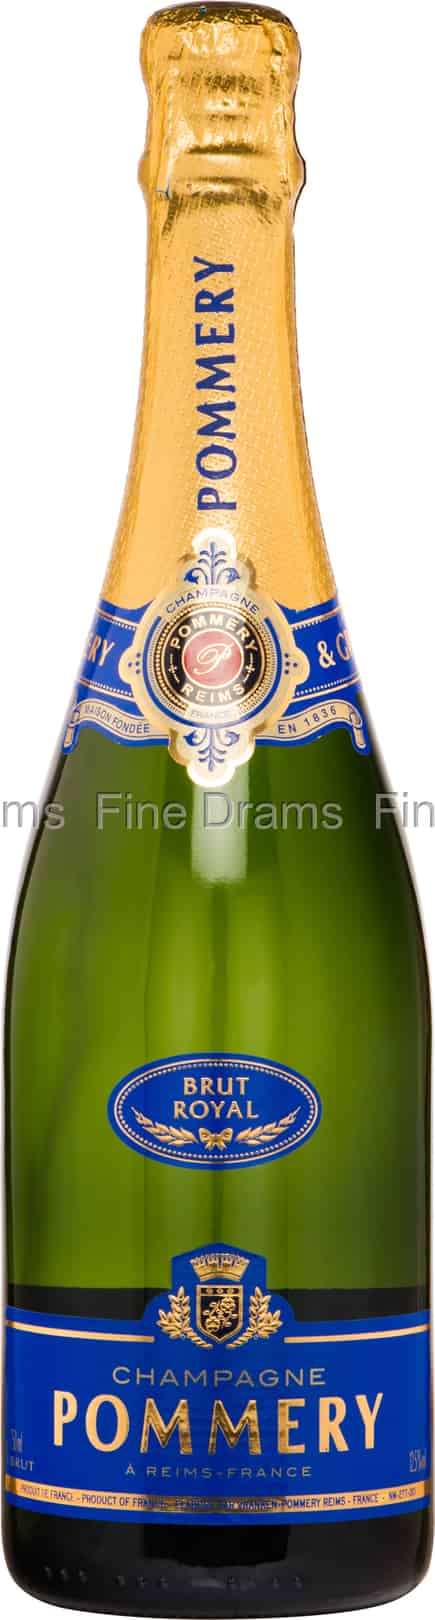 Royal Brut Champagne Pommery